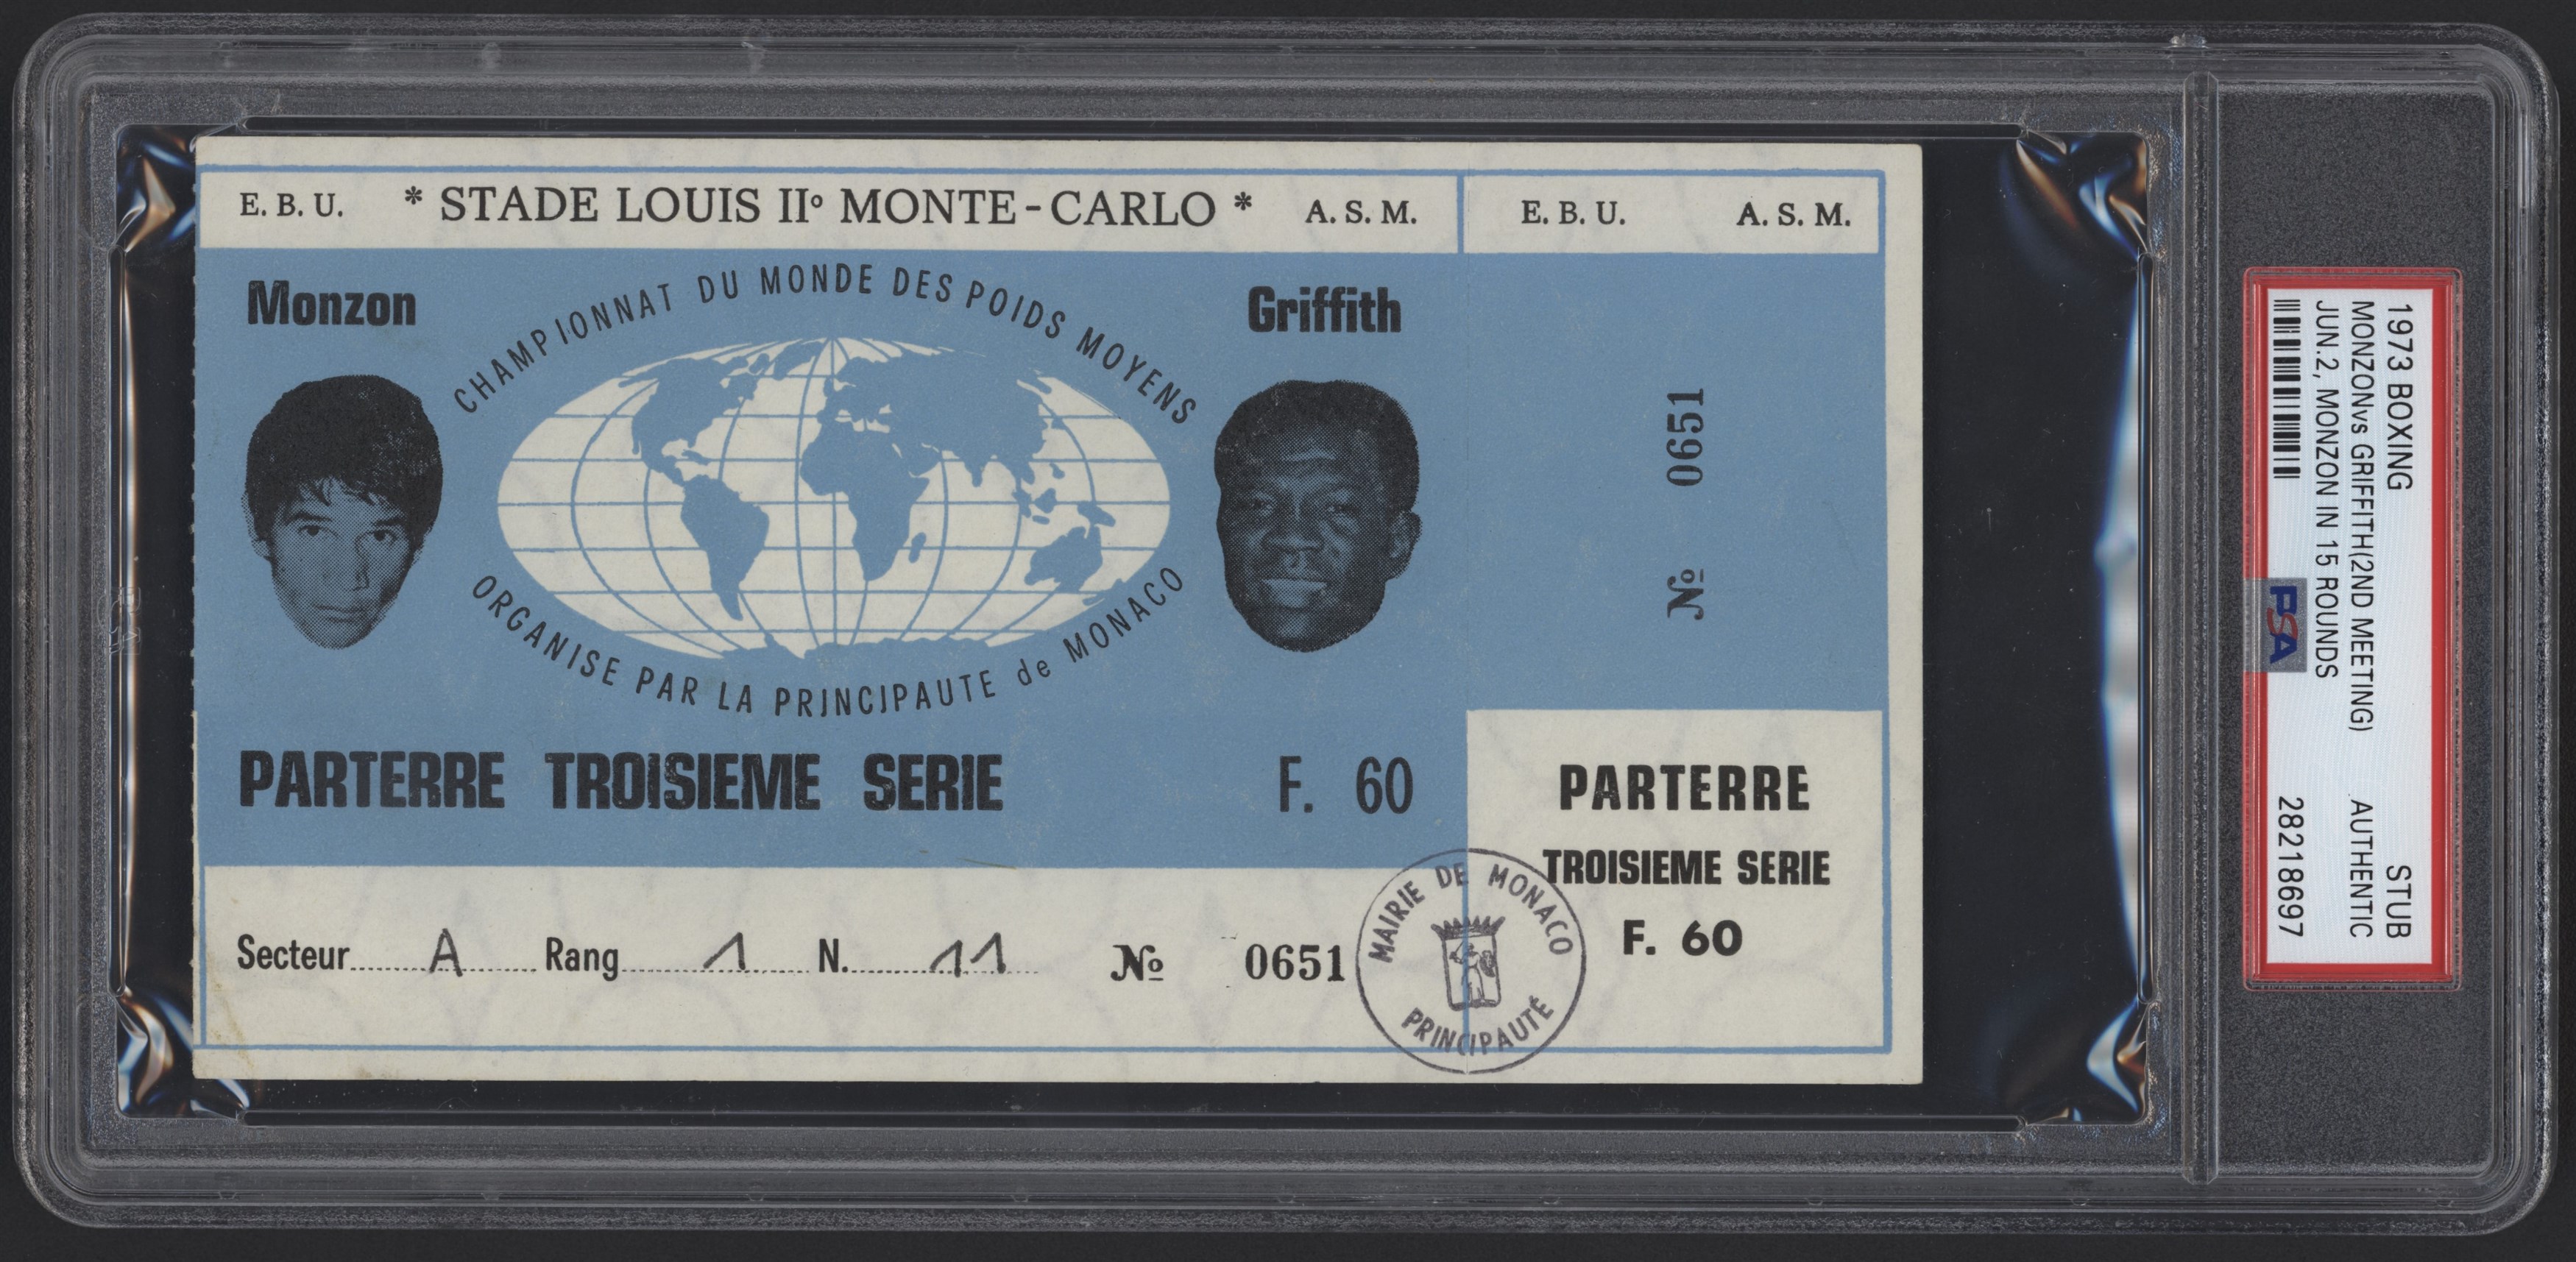 Tickets - 1973 Carlos Monzon vs. Emile Griffith Ticket Stub